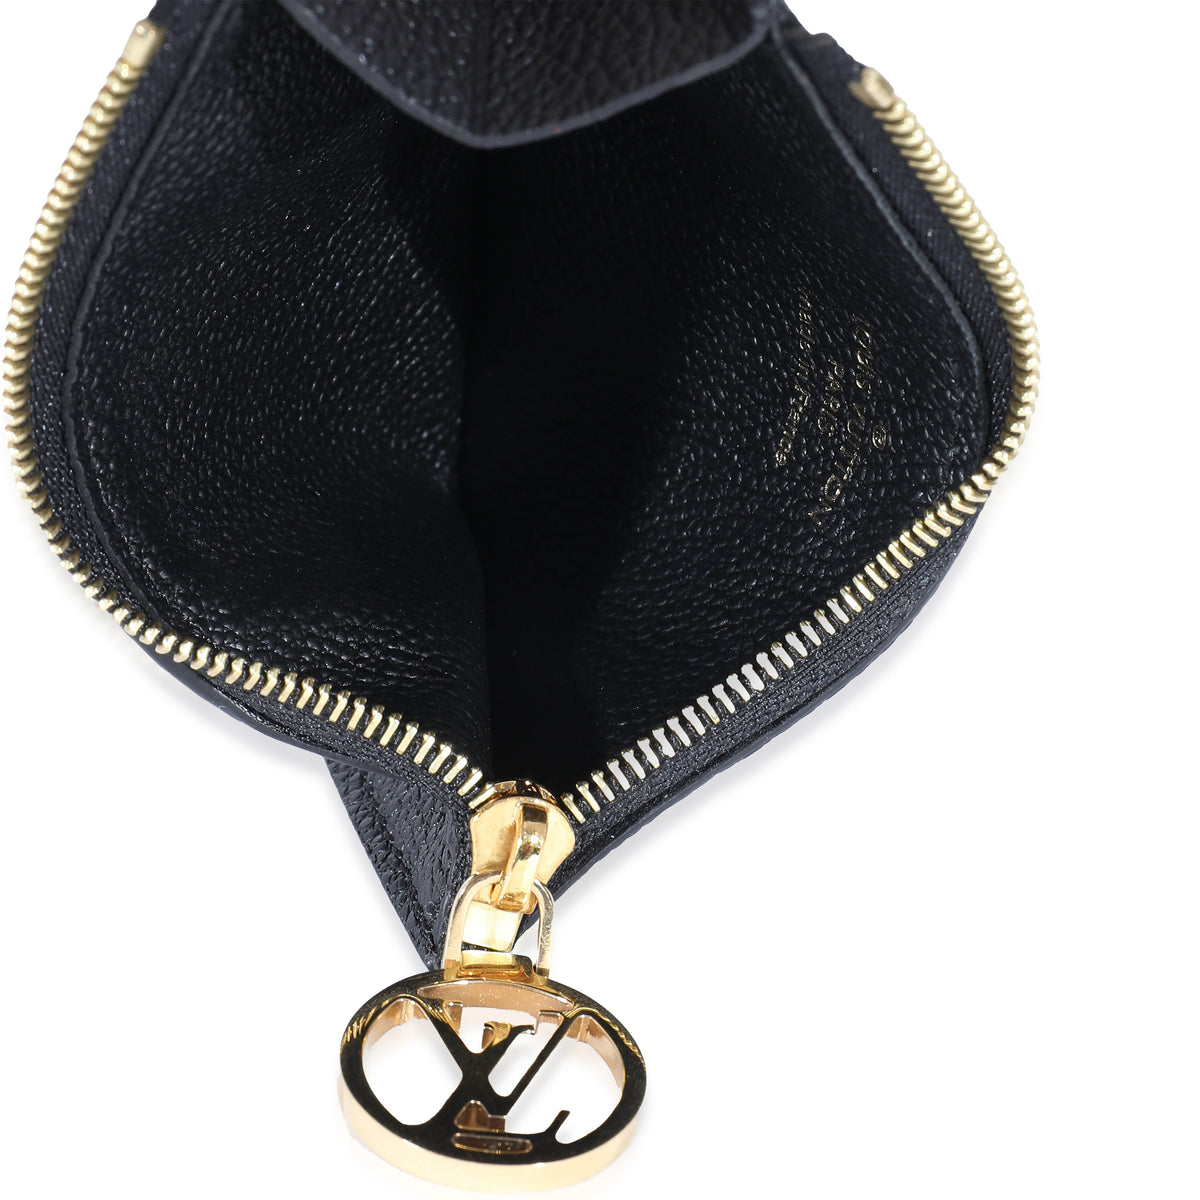 Accessories, Louis Vuitton Romy Cardholder Black